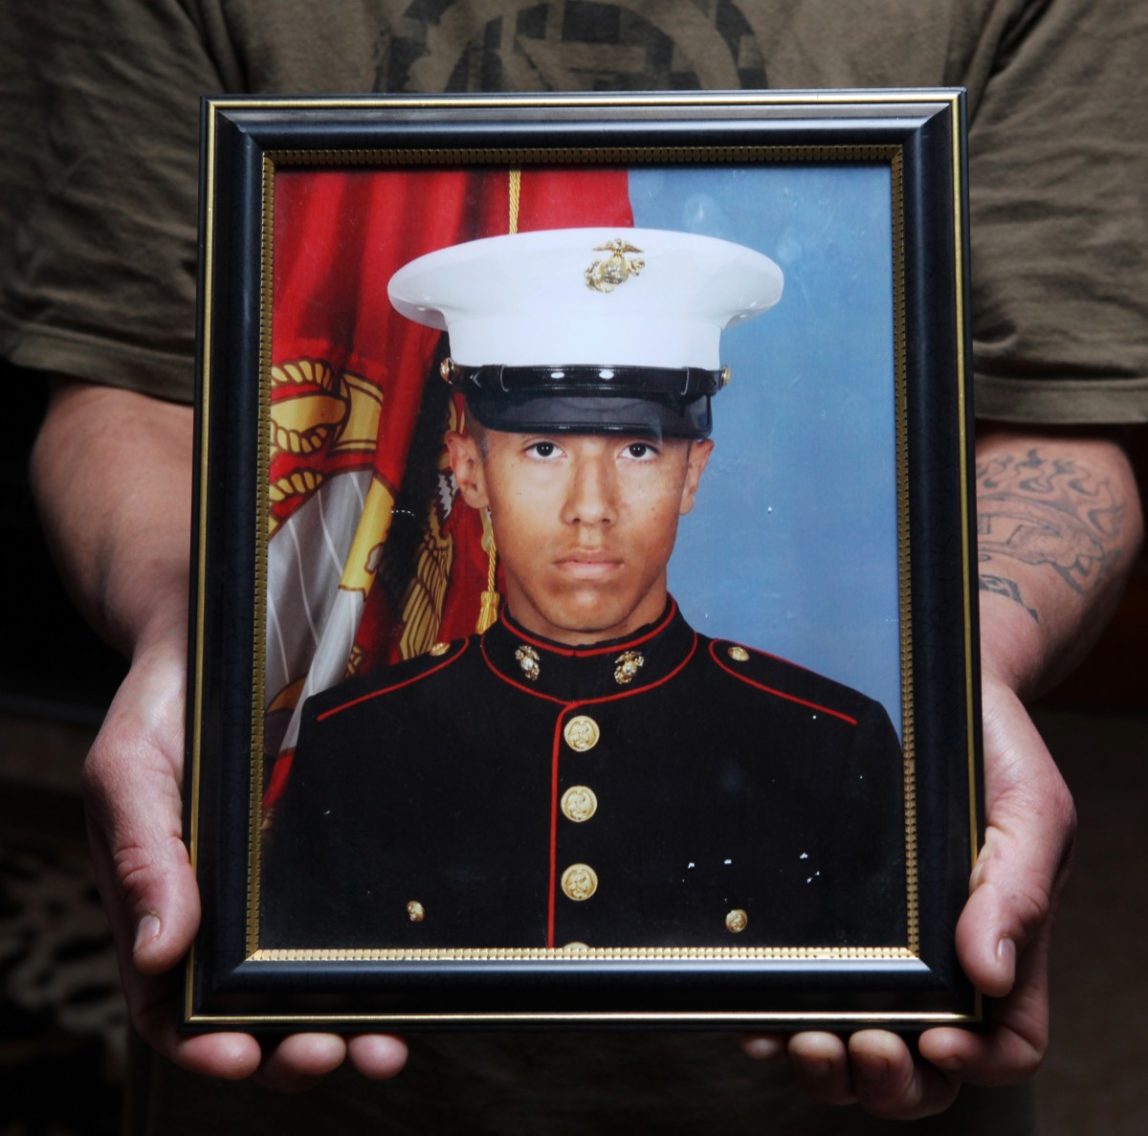 Marine veteran suspected in the deaths of homeless men